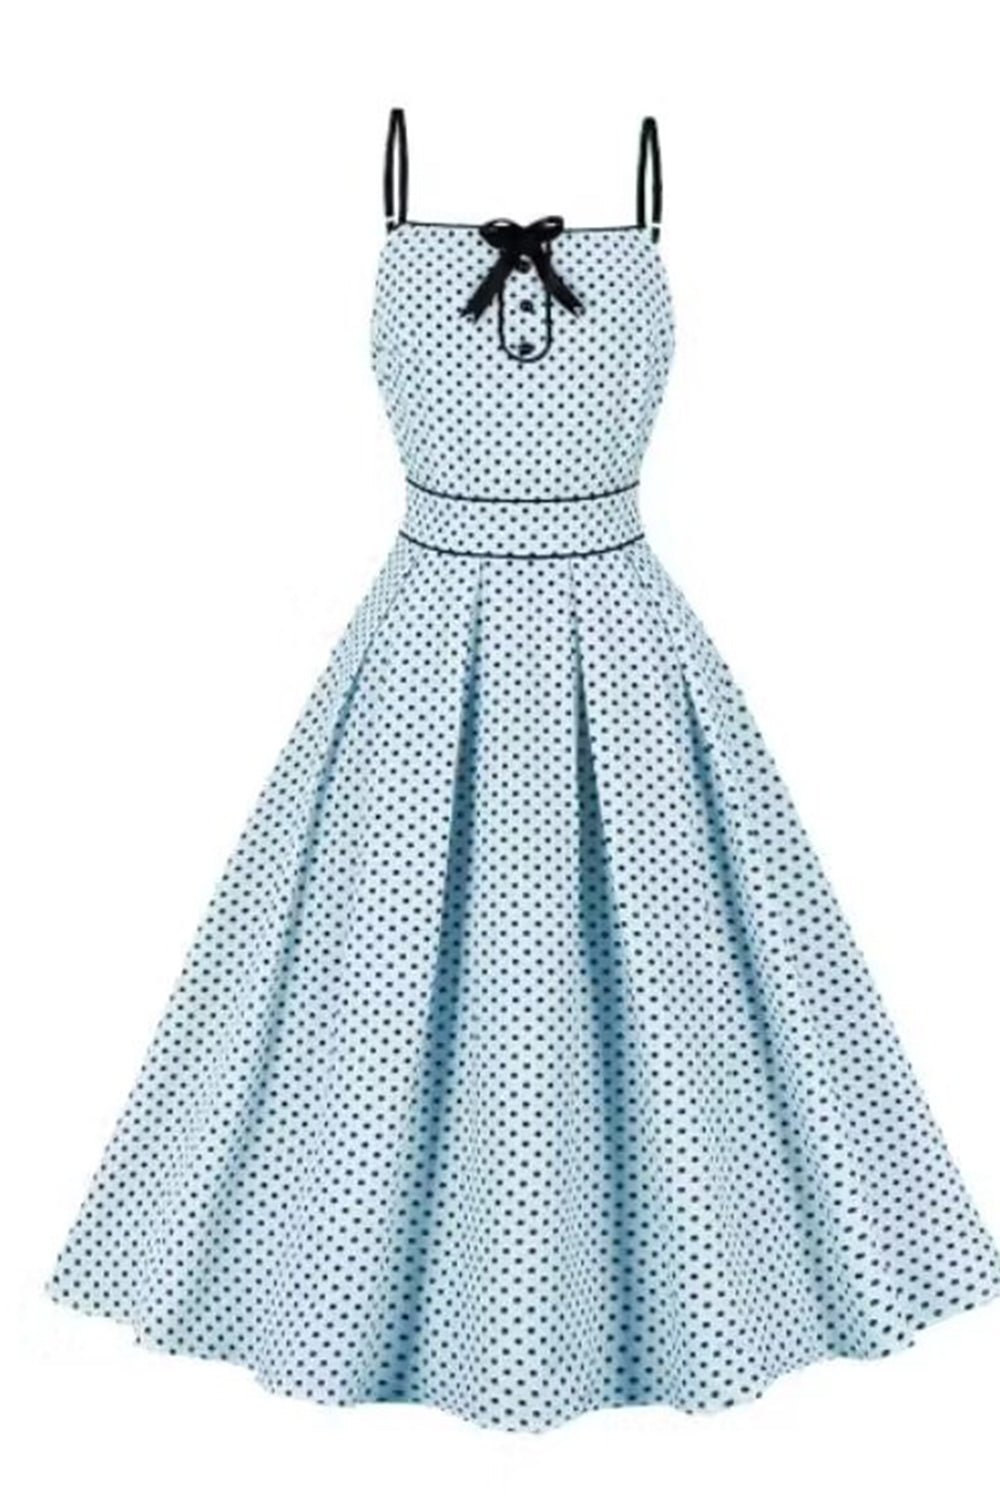 Blå Polka Dots Pin Up 1950 Vintage Dress